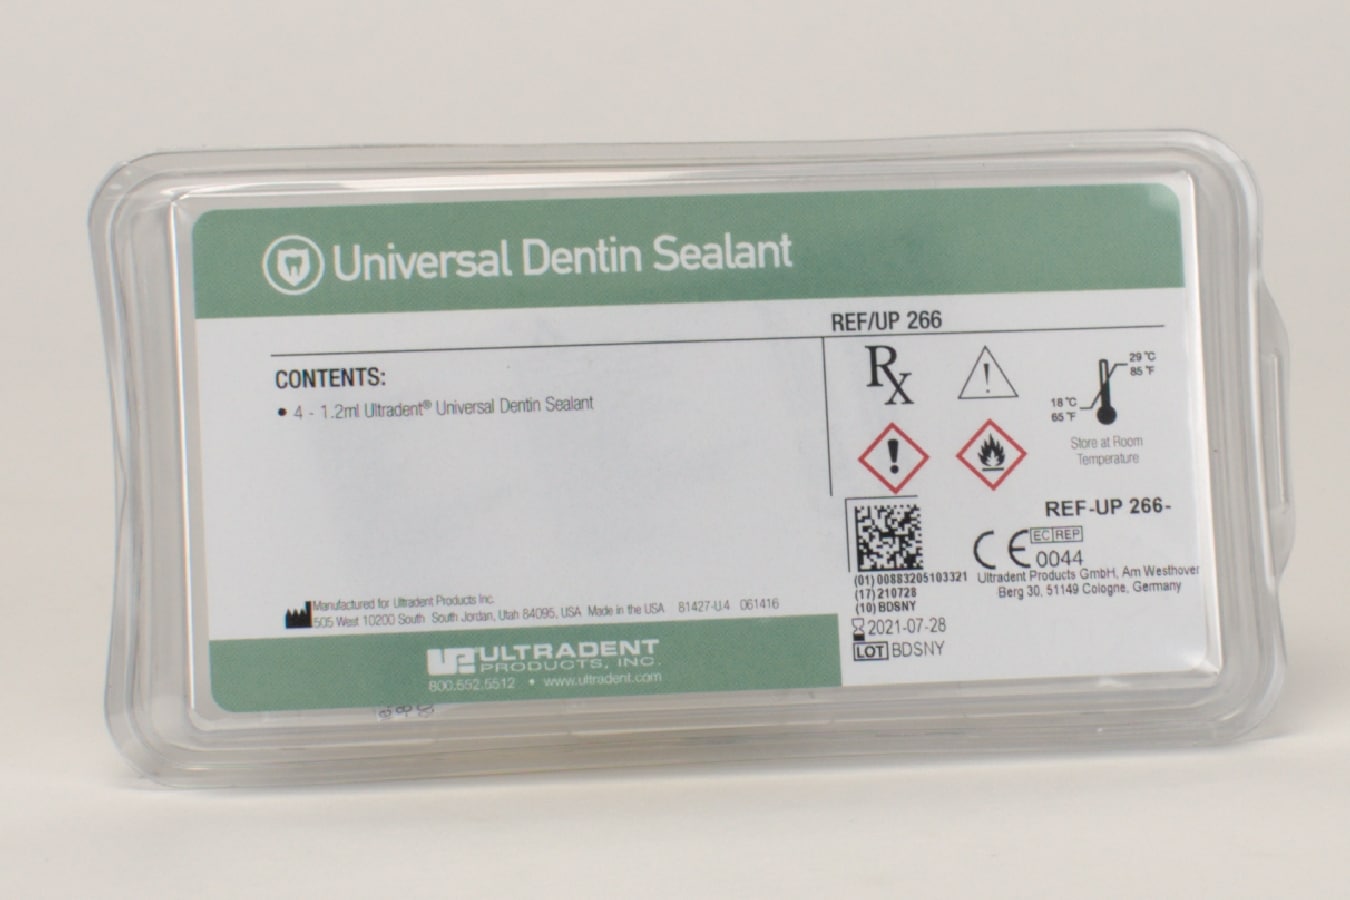 Universal Dentin Sealant refill 4x1,2ml